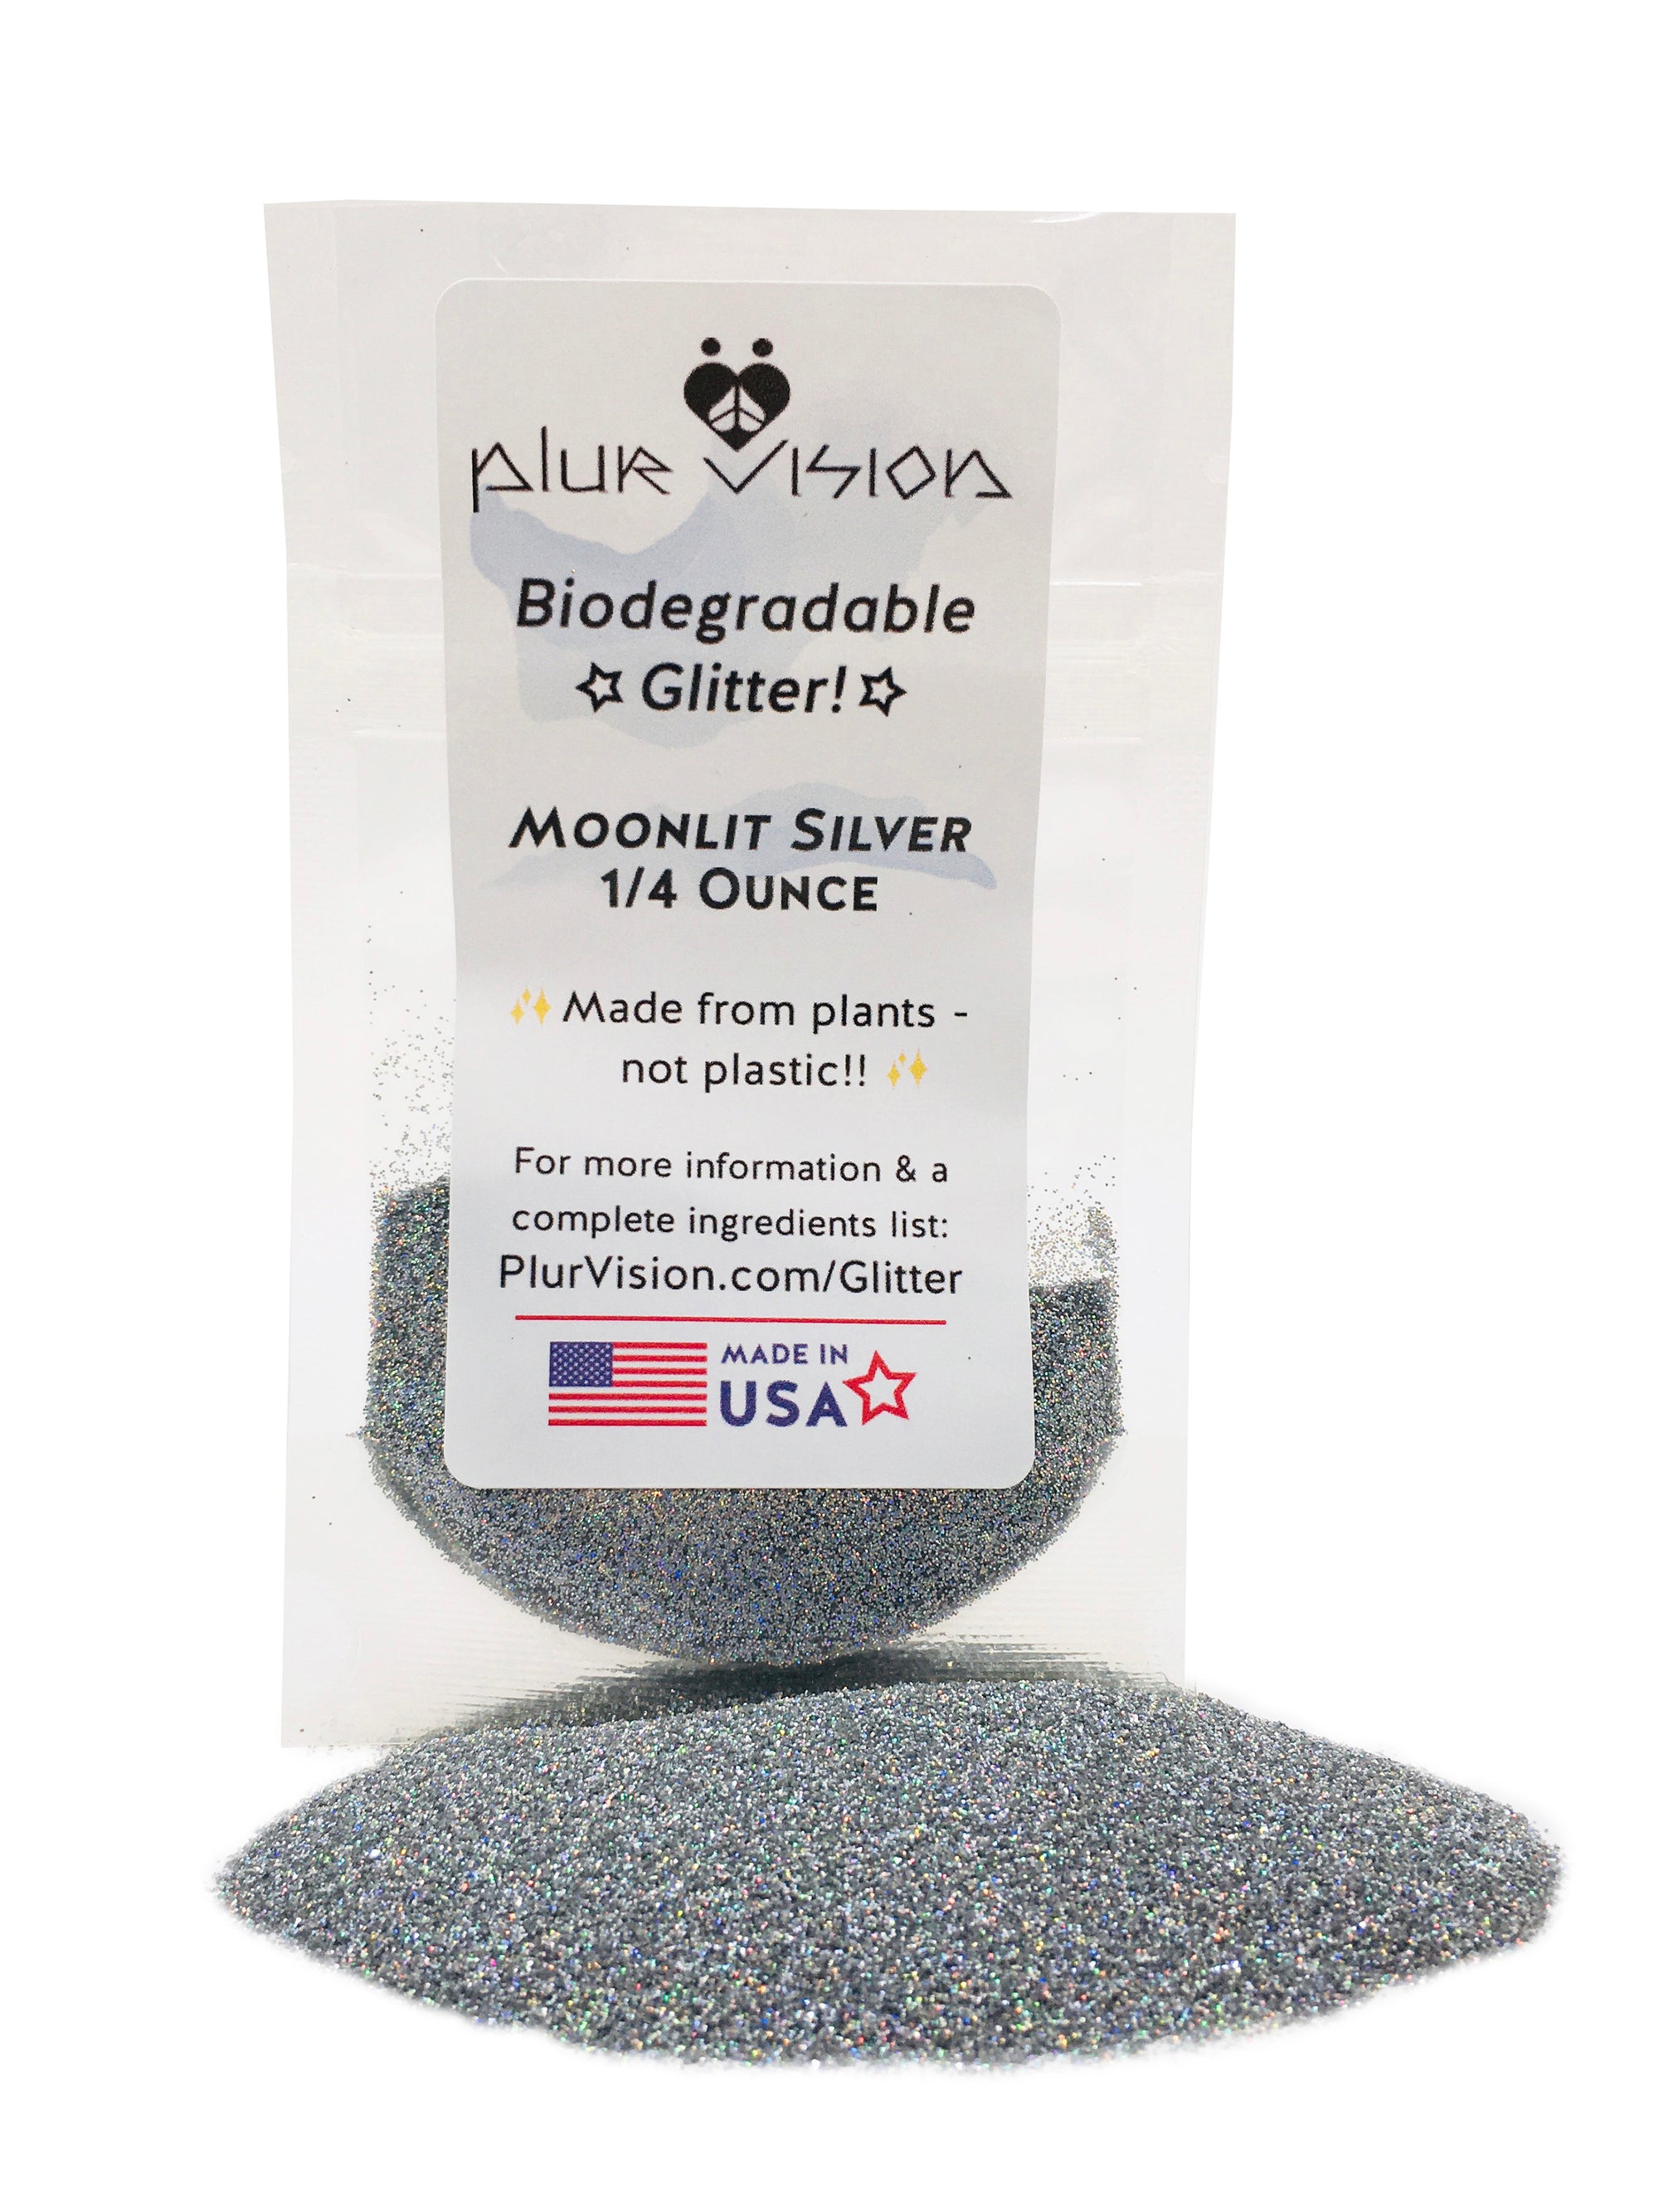 ✨ Moonlit Silver Biodegradable Glitter! ✨